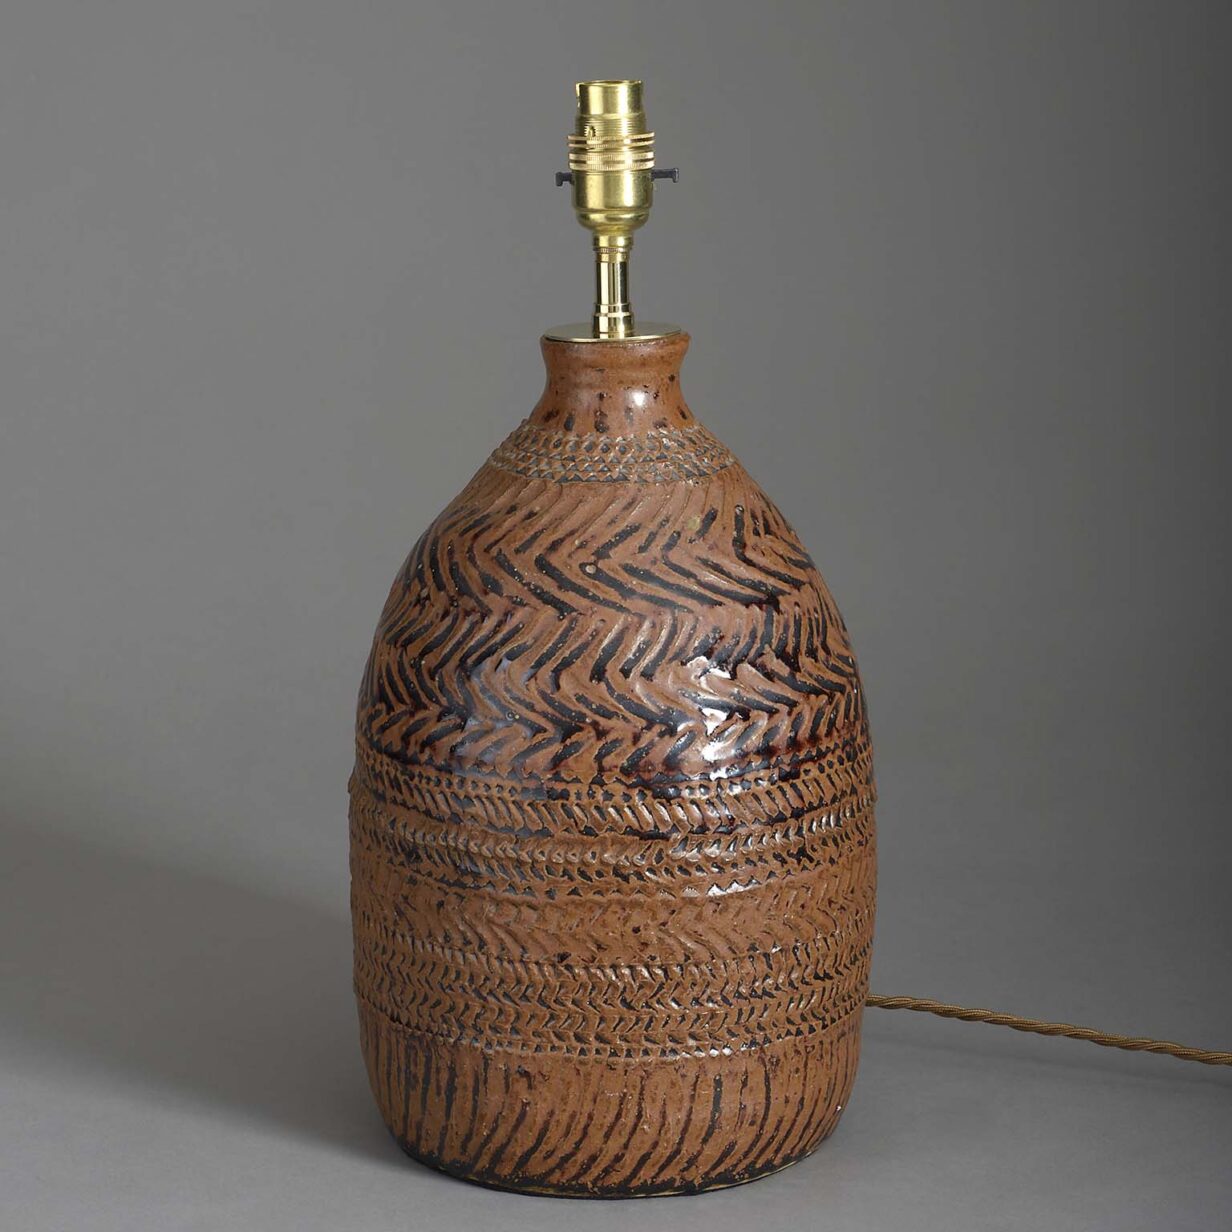 Incised terracotta vase lamp